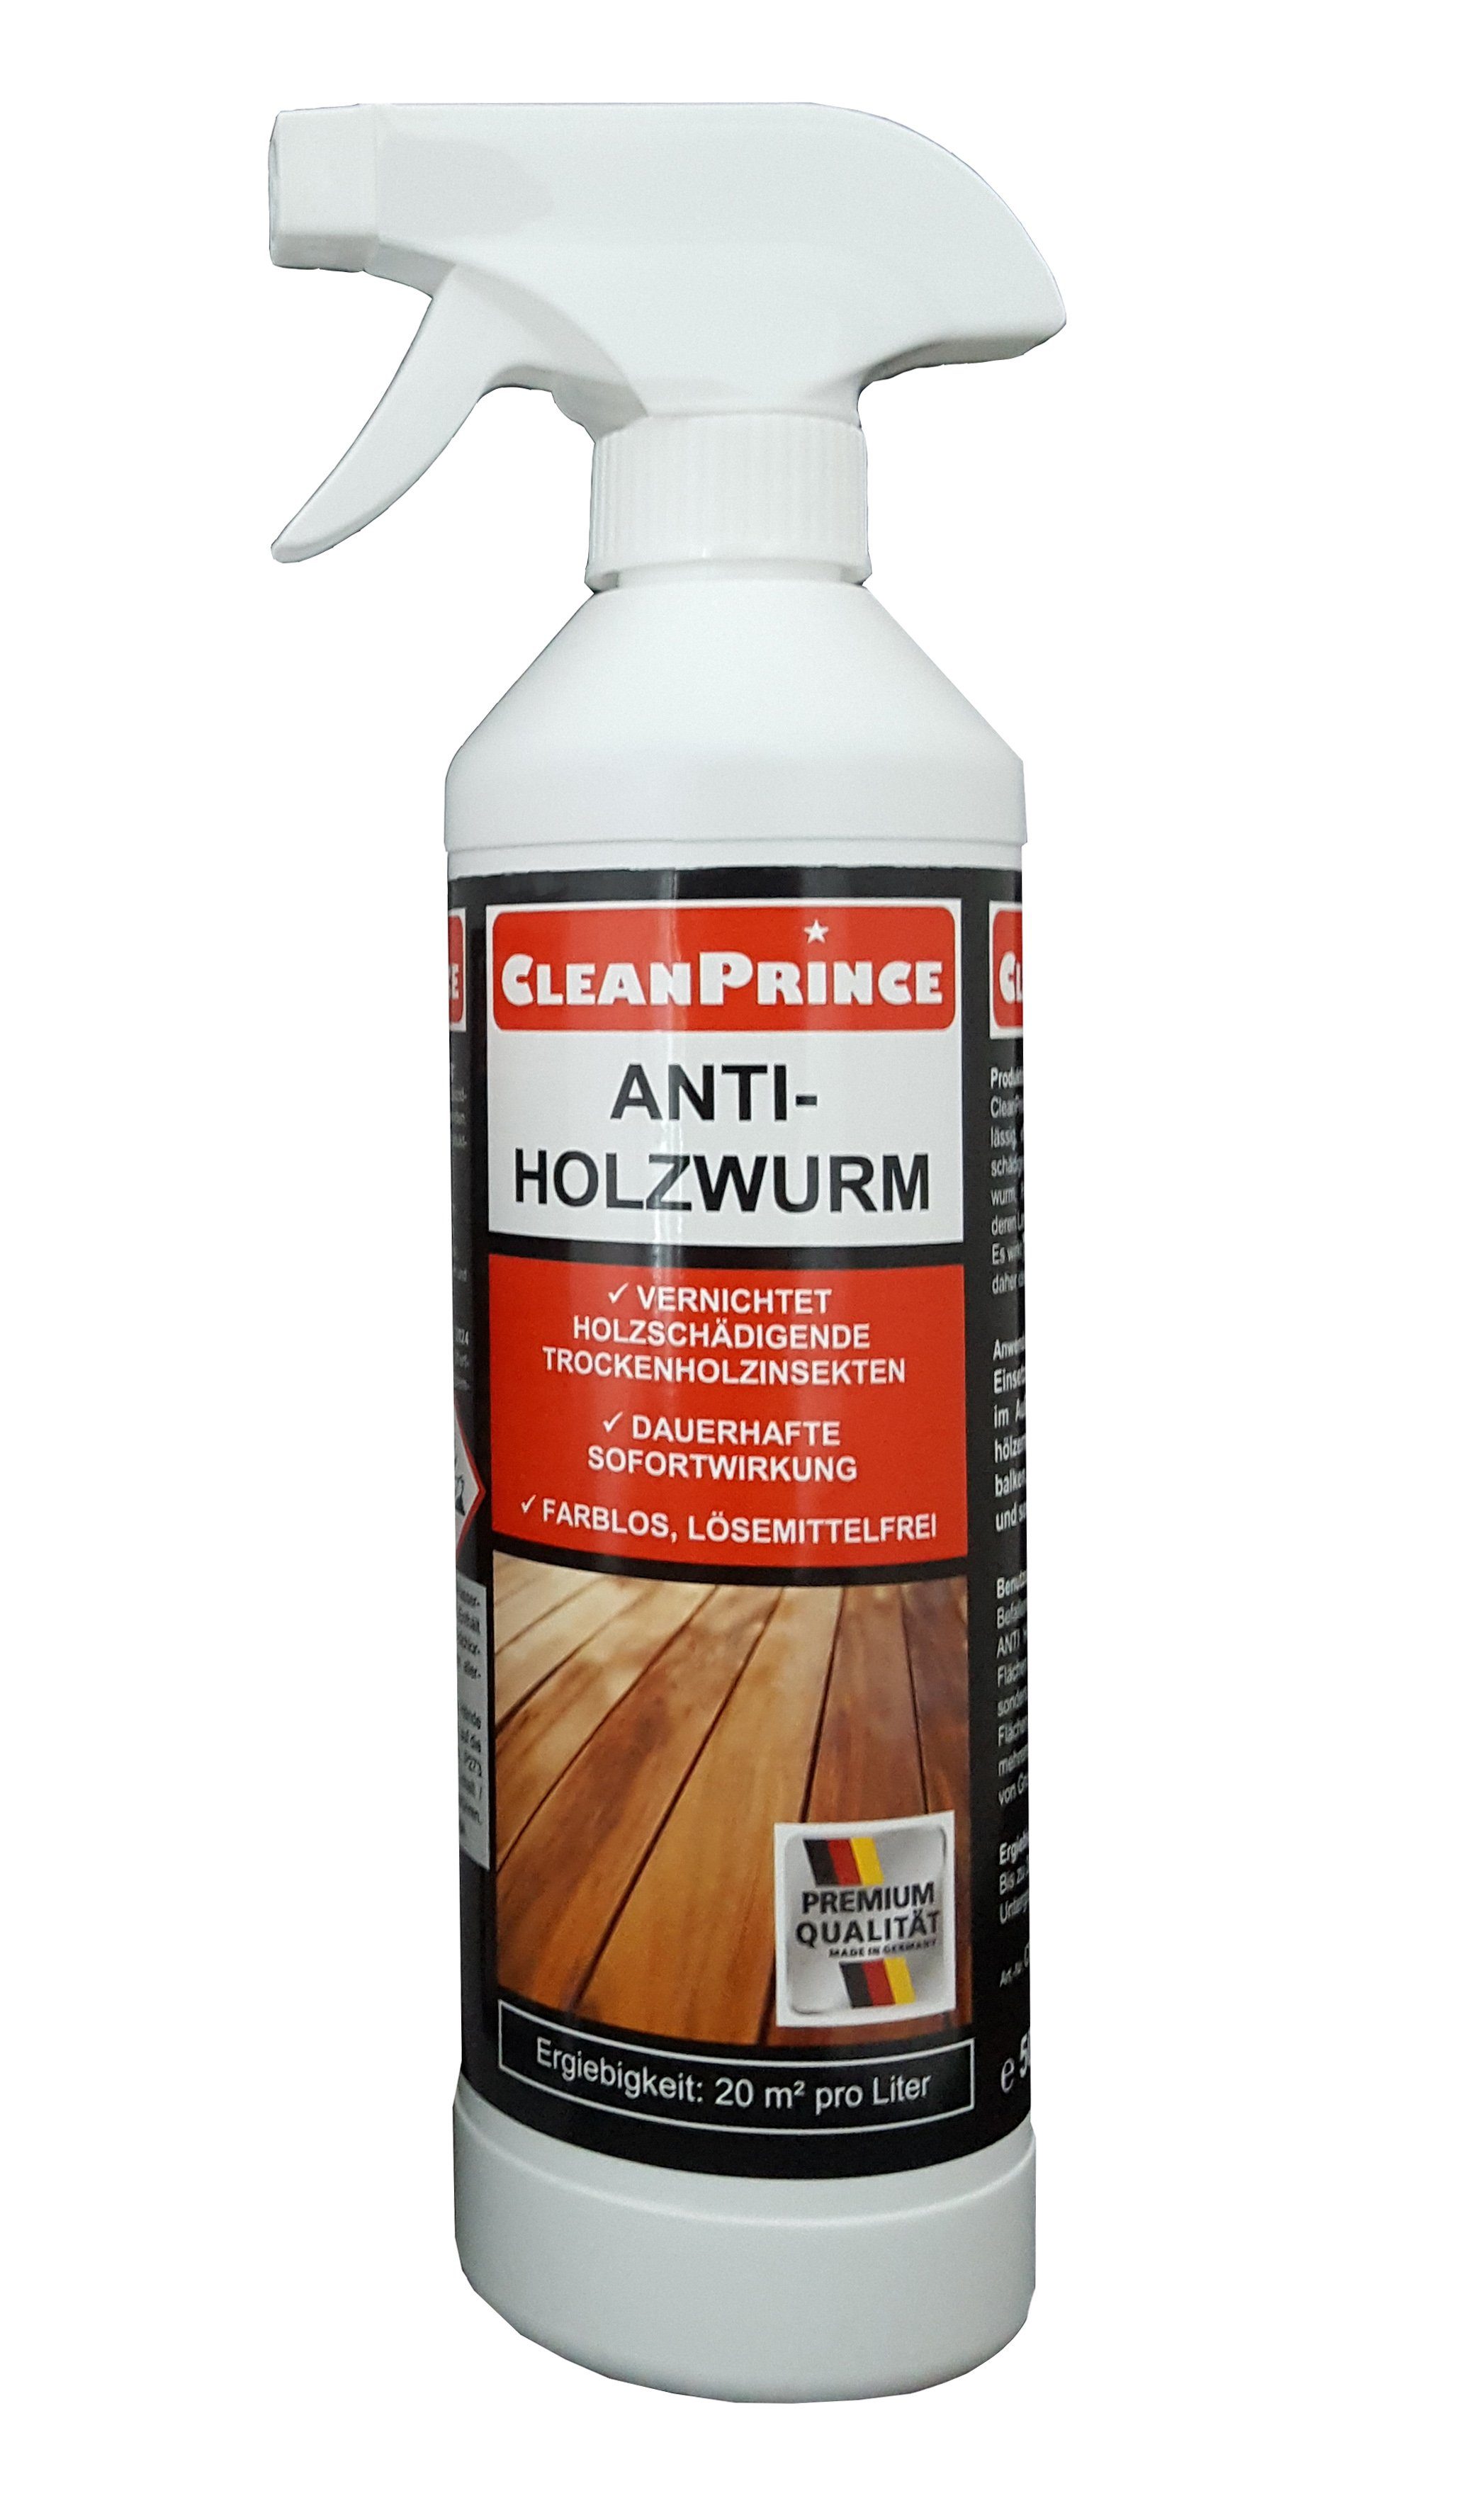 Holzwurm Holzwurm-Ex CleanPrince Holzwurm-Ex Holzfliegen Anti Spray